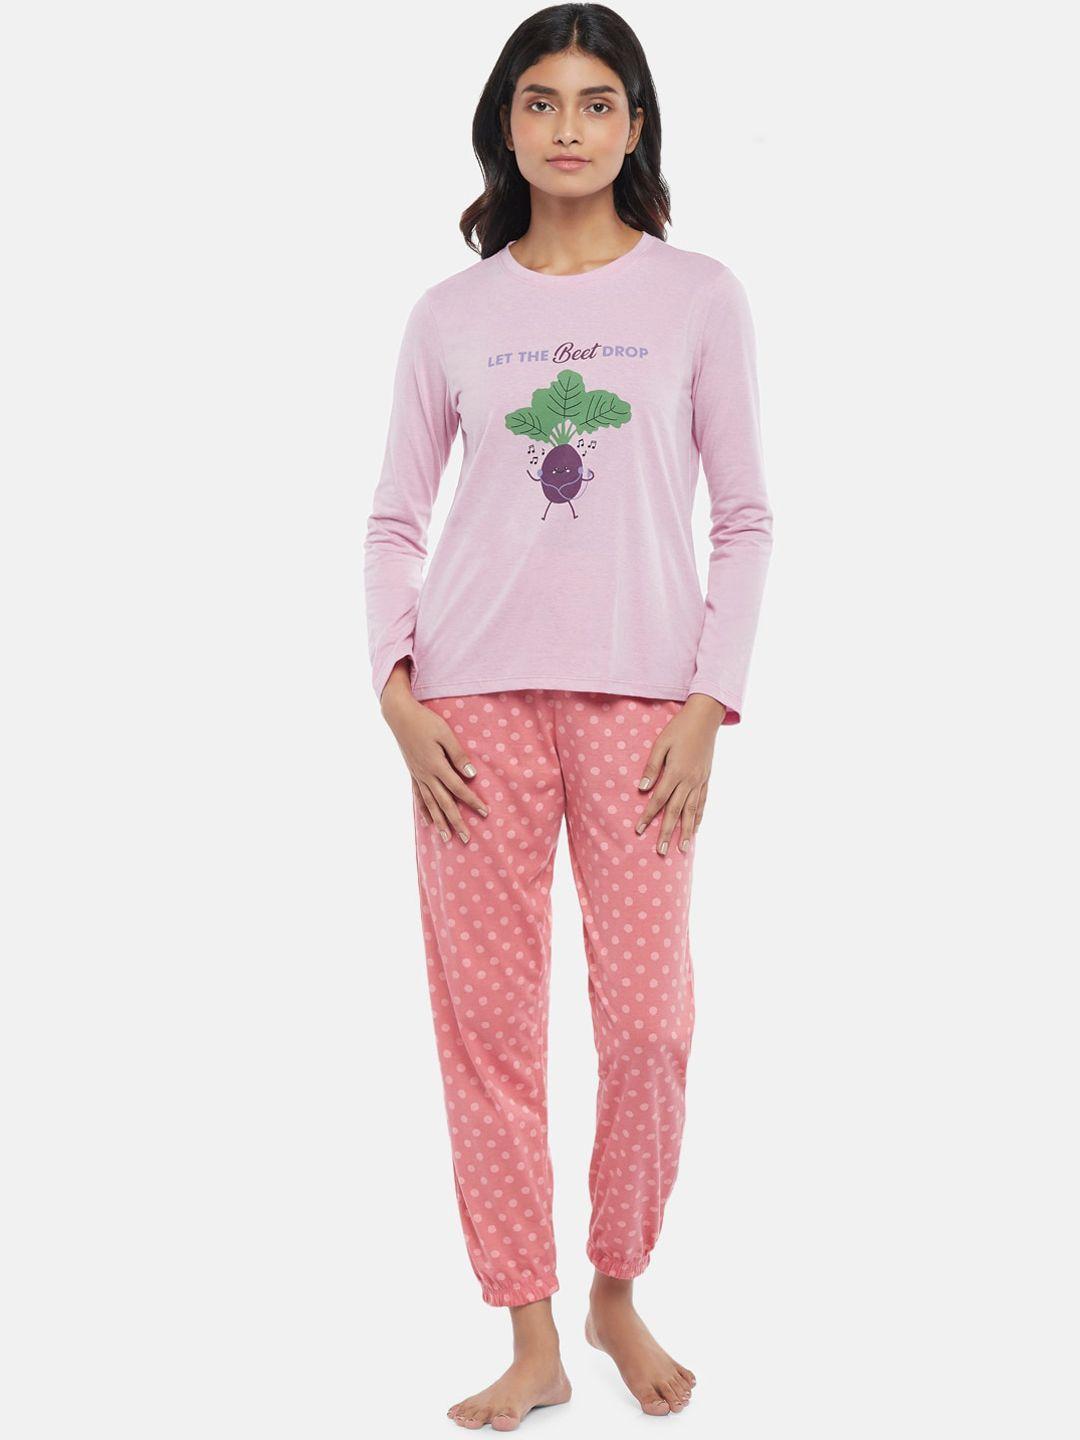 dreamz by pantaloons women pink & purple printed night suit